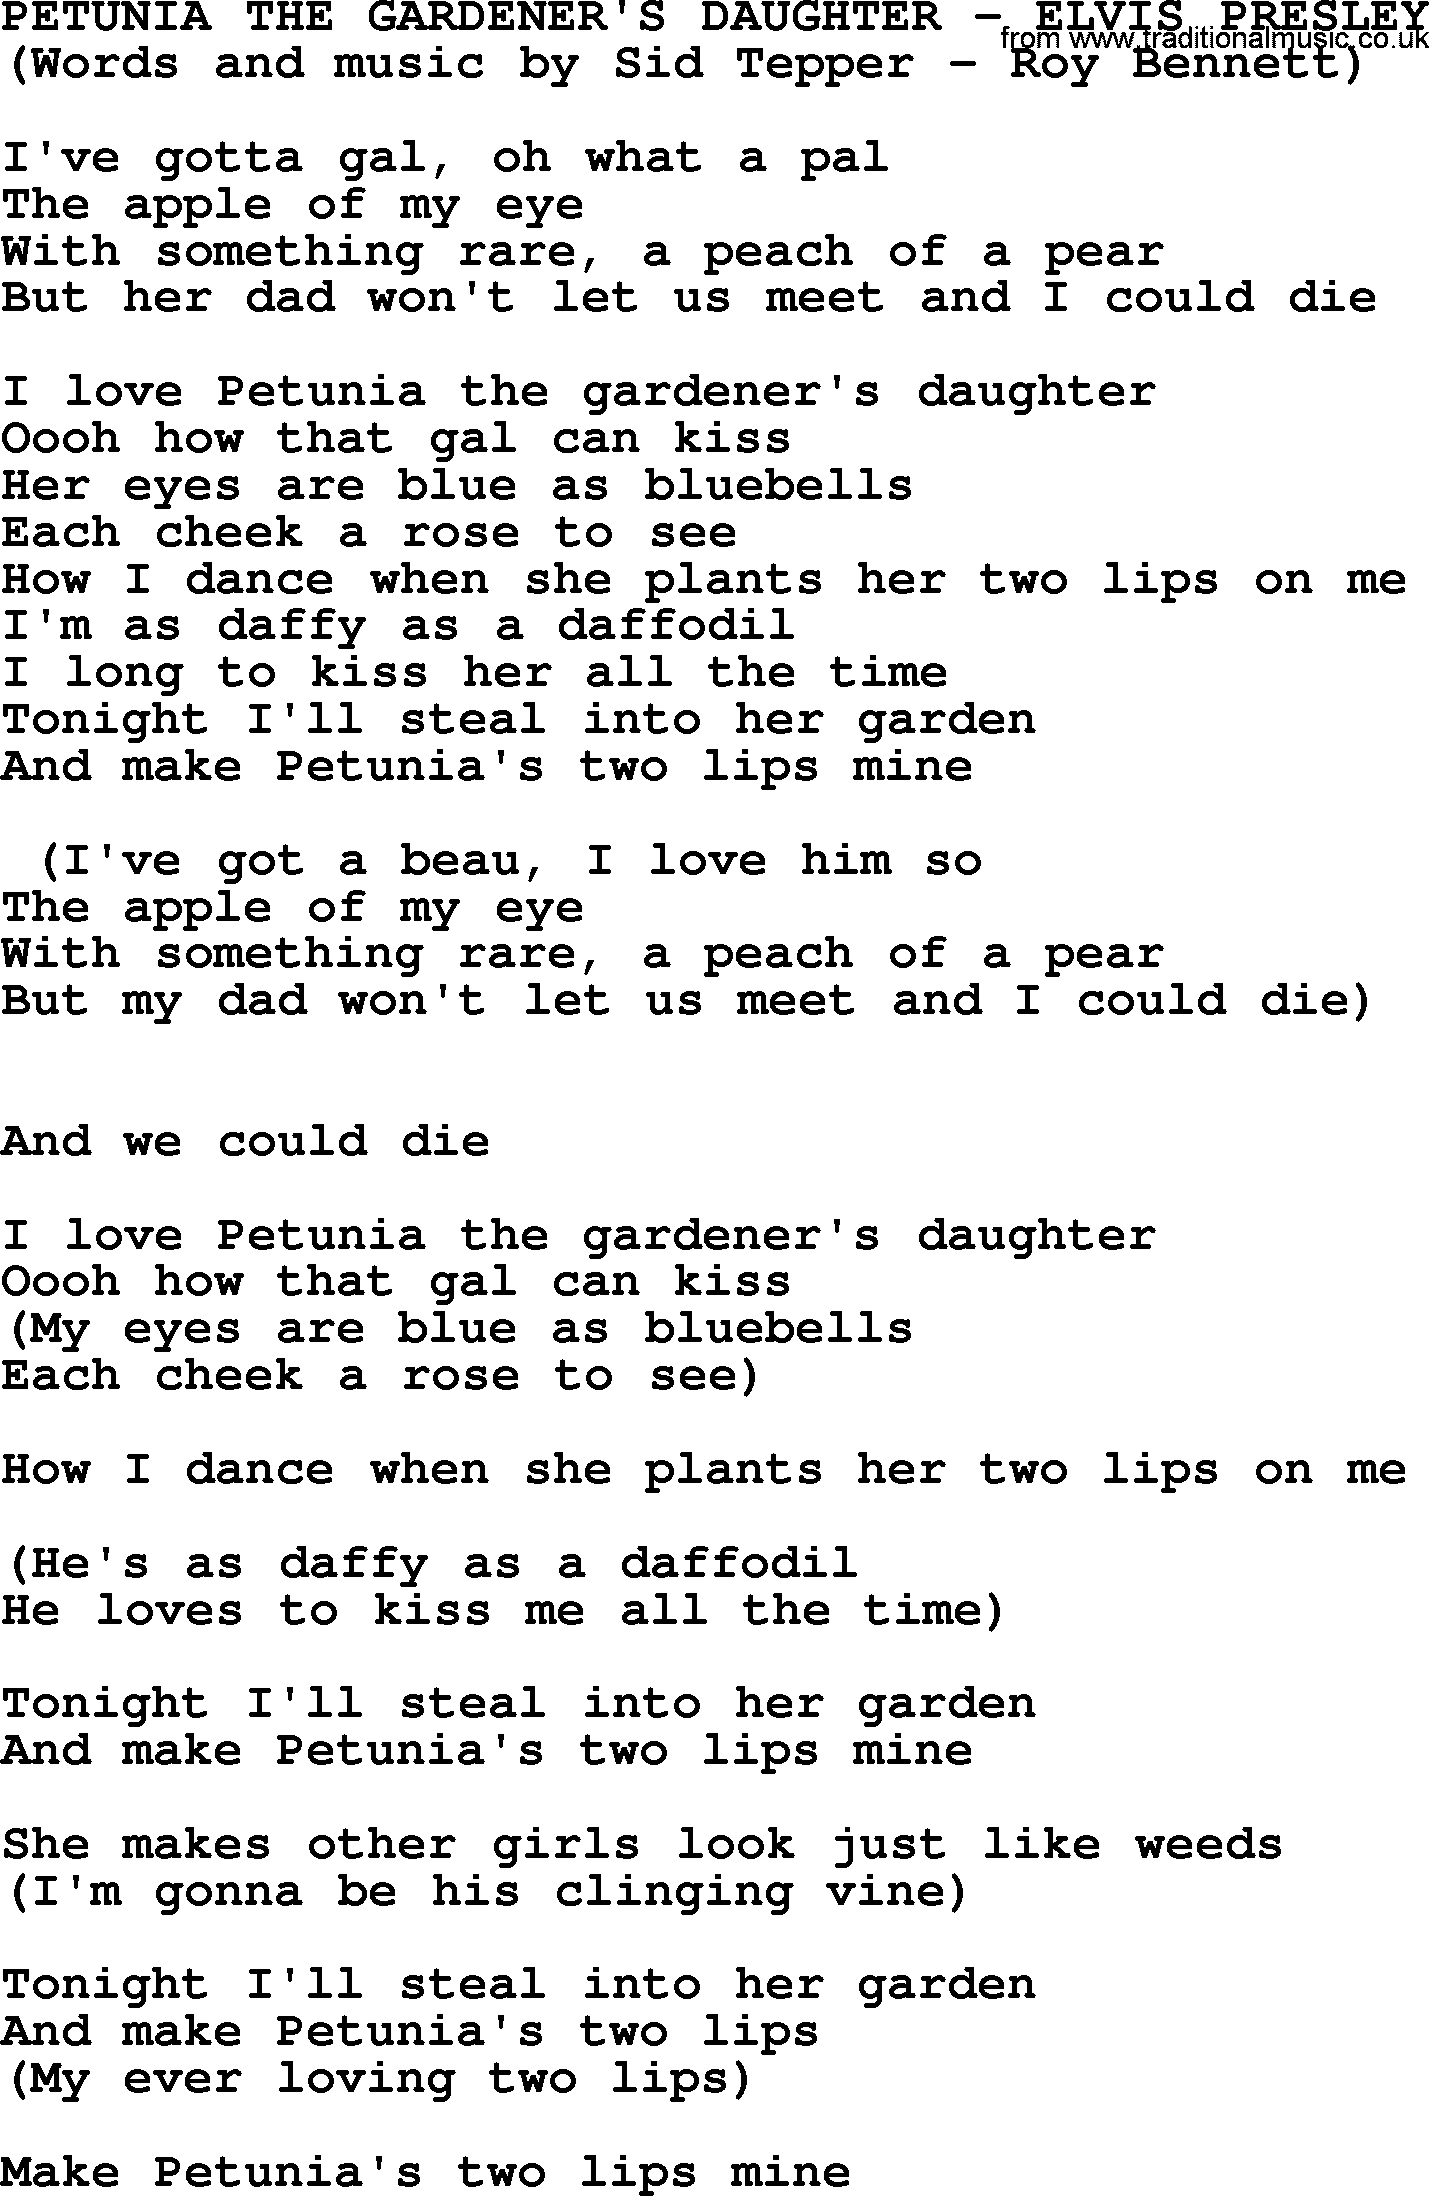 Elvis Presley song: Petunia The Gardener's Daughter lyrics